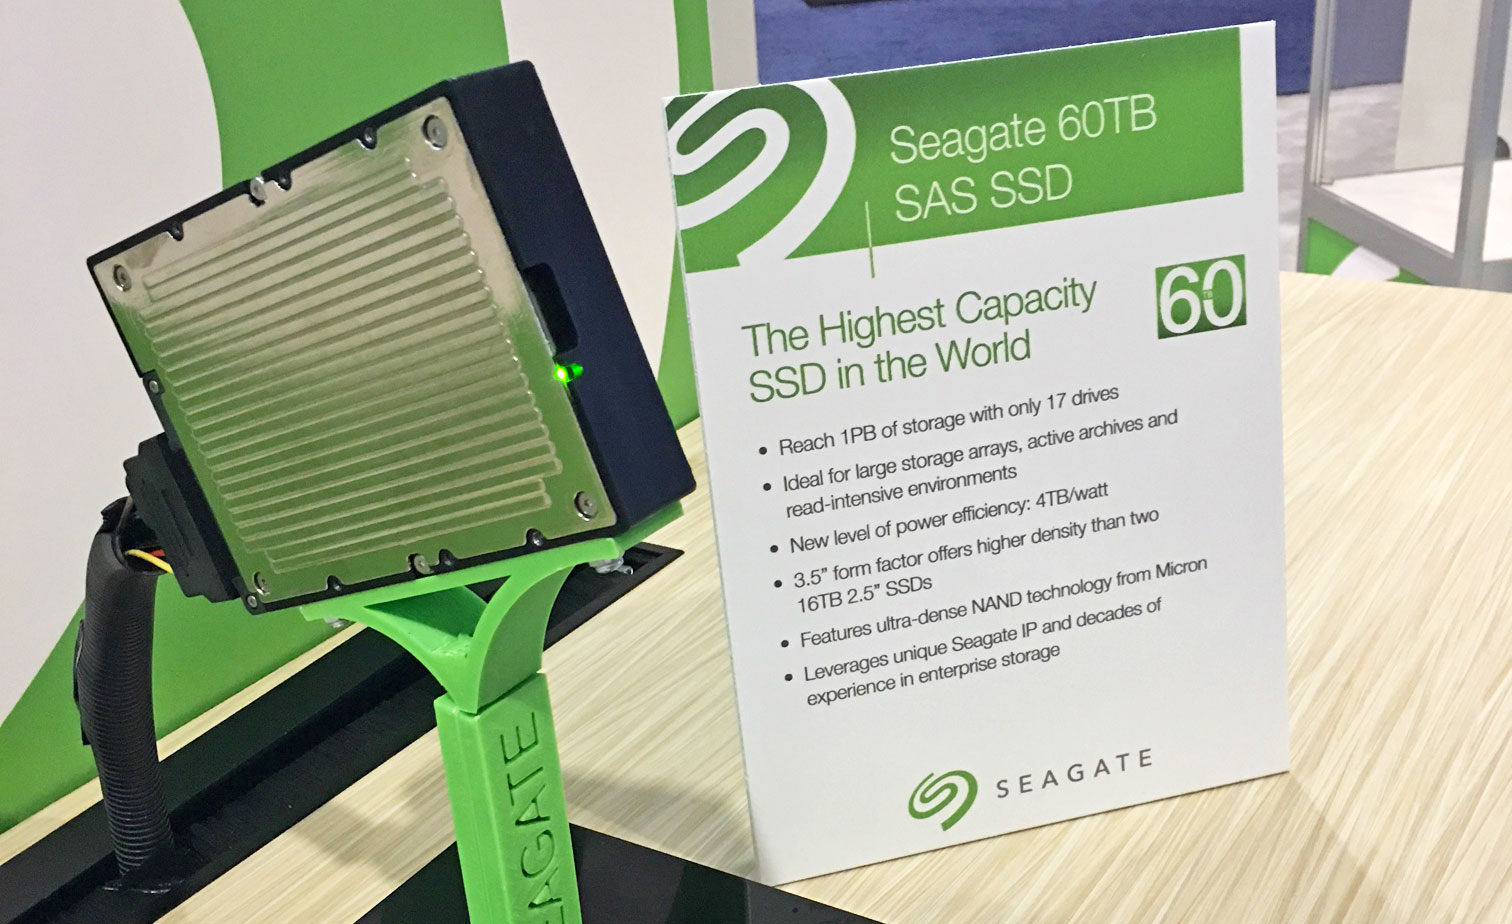 Seagate 60TB SAS SSD